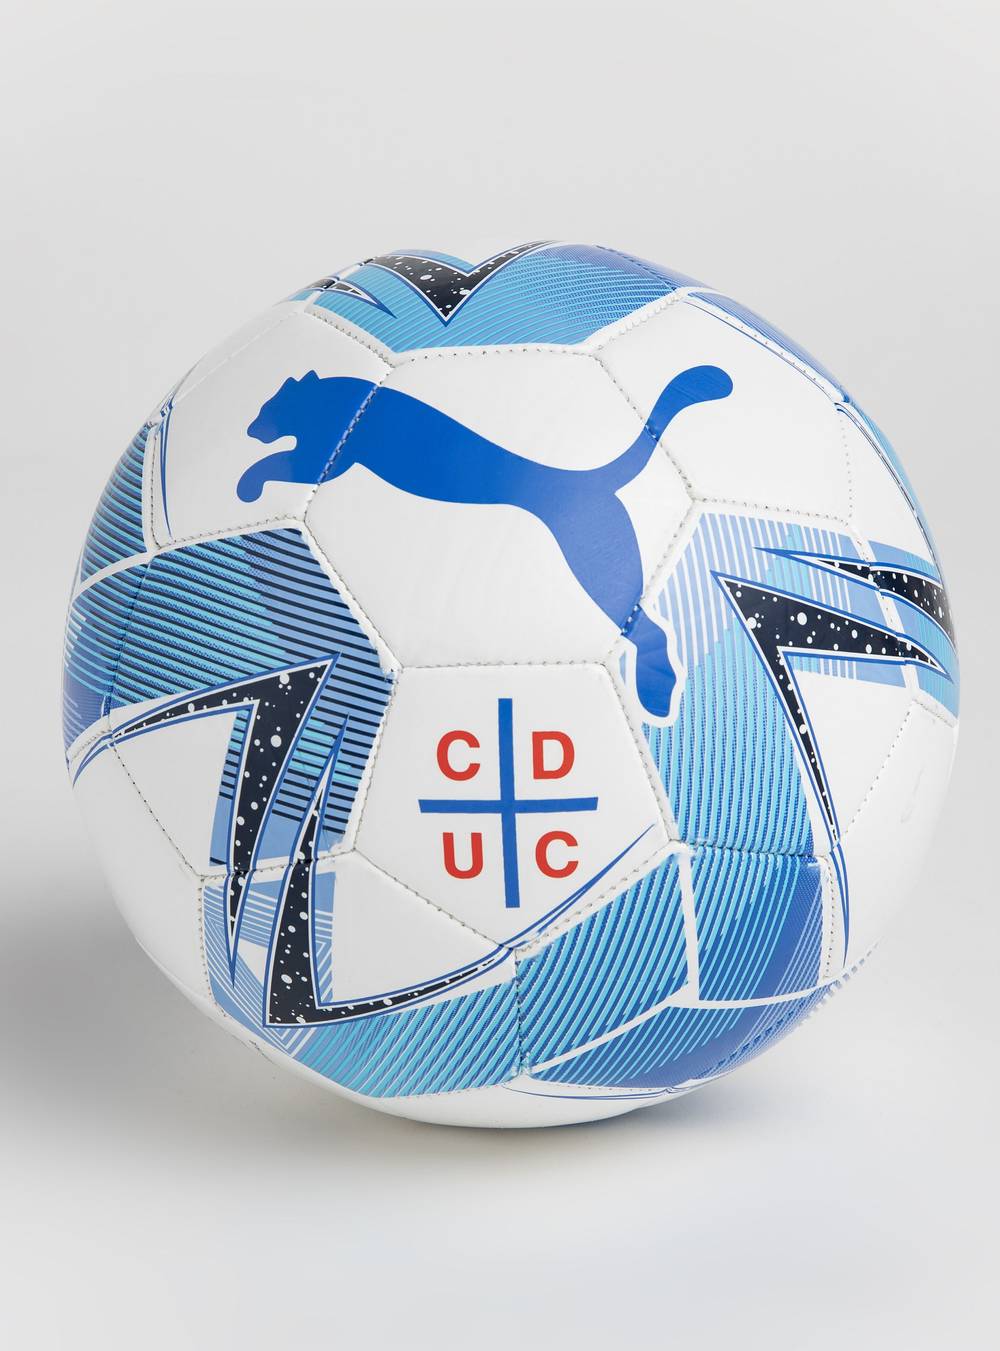 Puma balón de fútbol 3 ms ball cduc futsal (standar/azul)